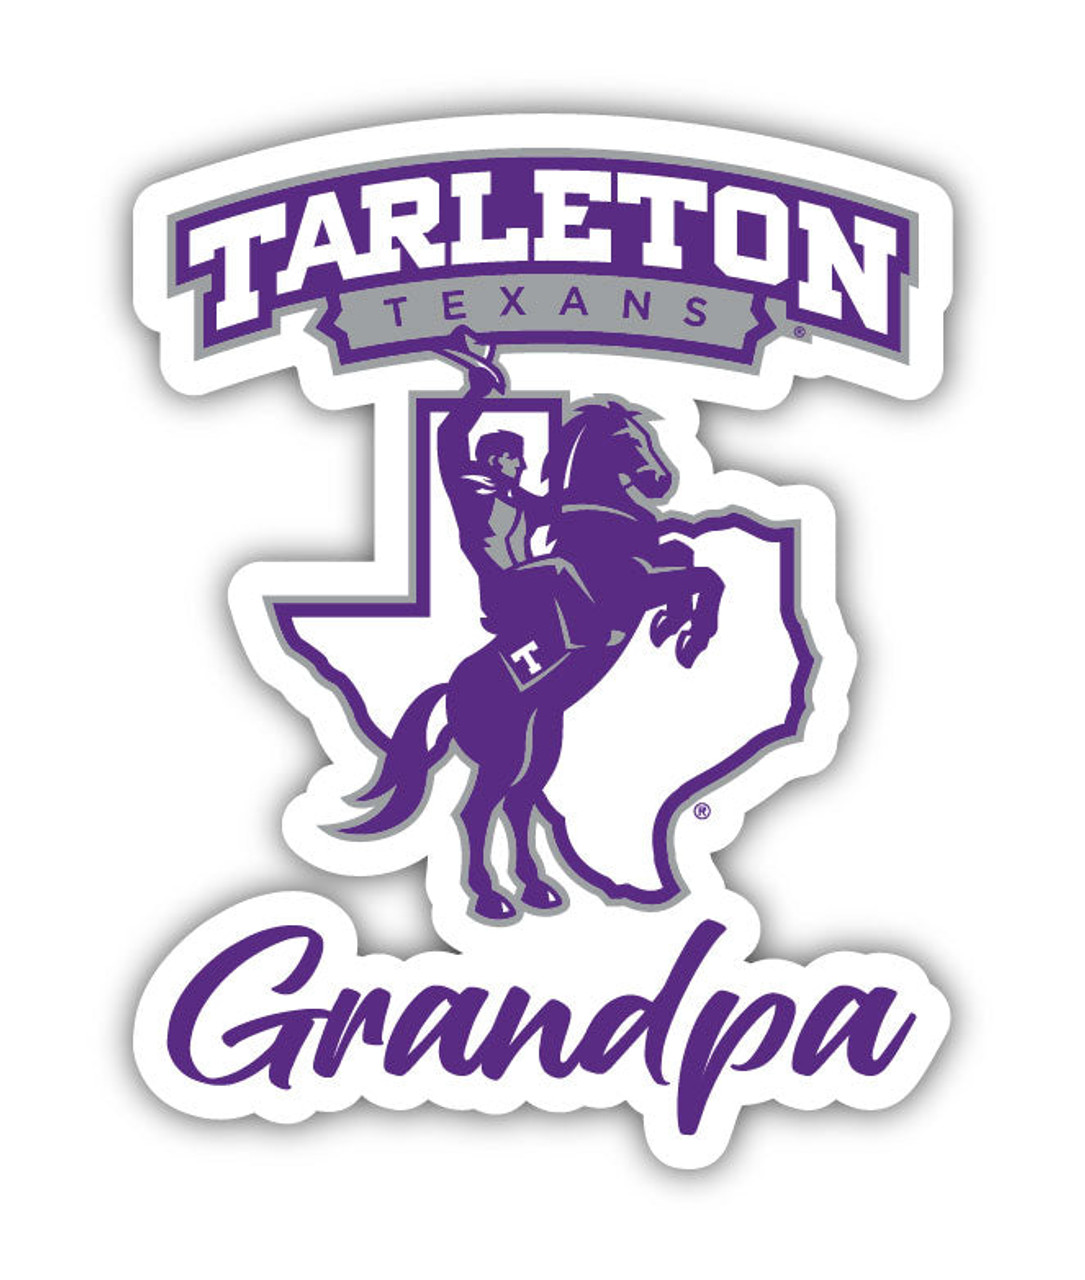 Tarleton State University 4 Inch Proud Grandpa Die Cut Decal